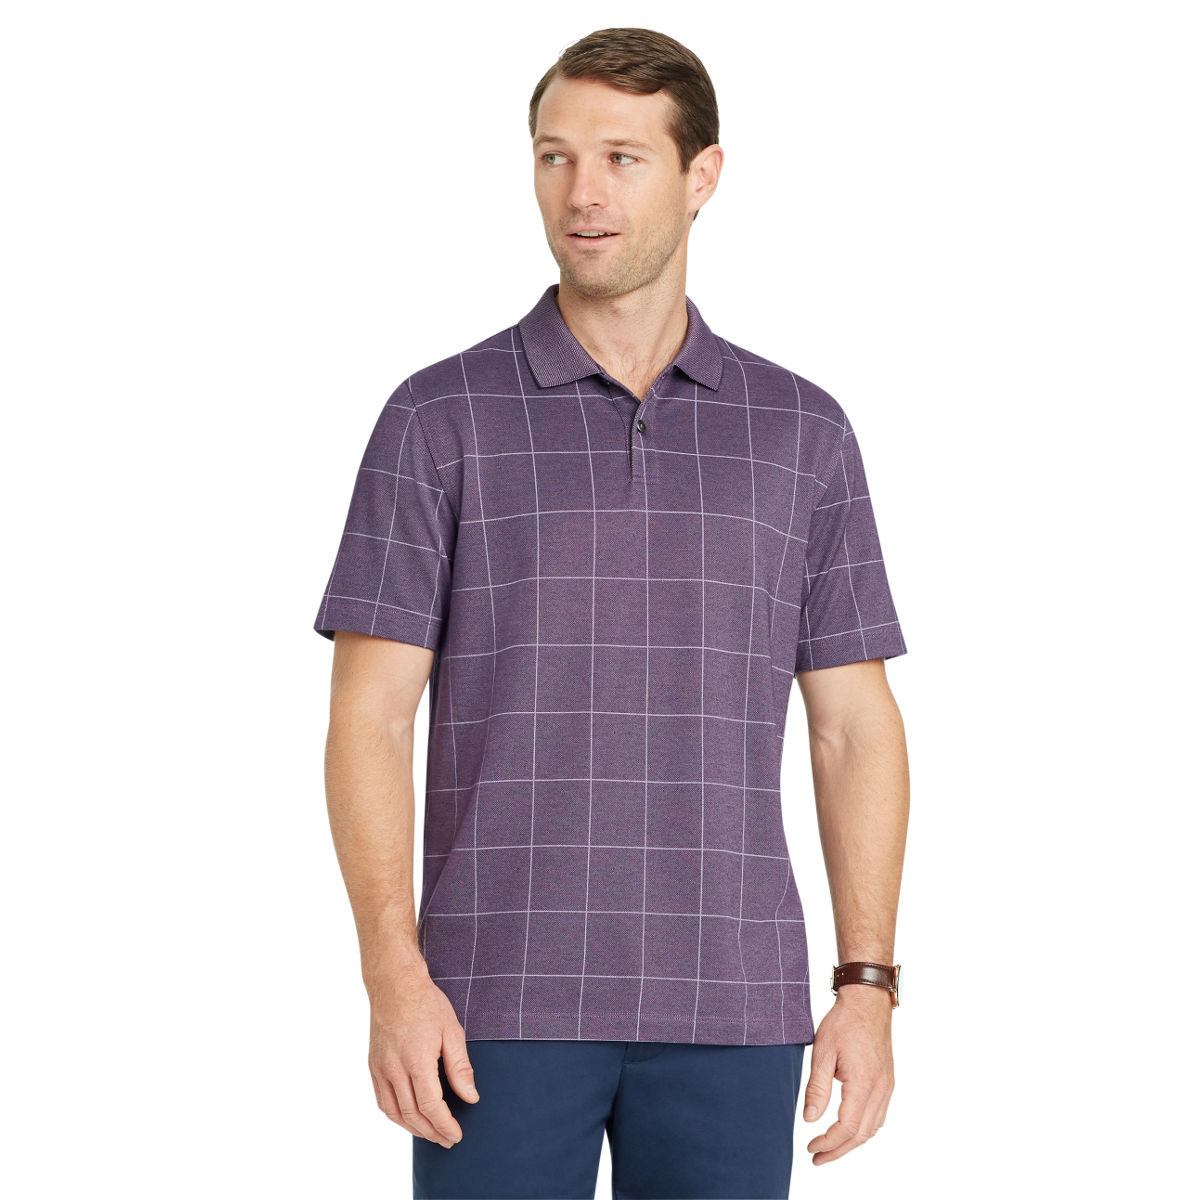 Van Heusen Men's Flex Print Windowpane Short-Sleeve Polo Shirt - Purple, XL